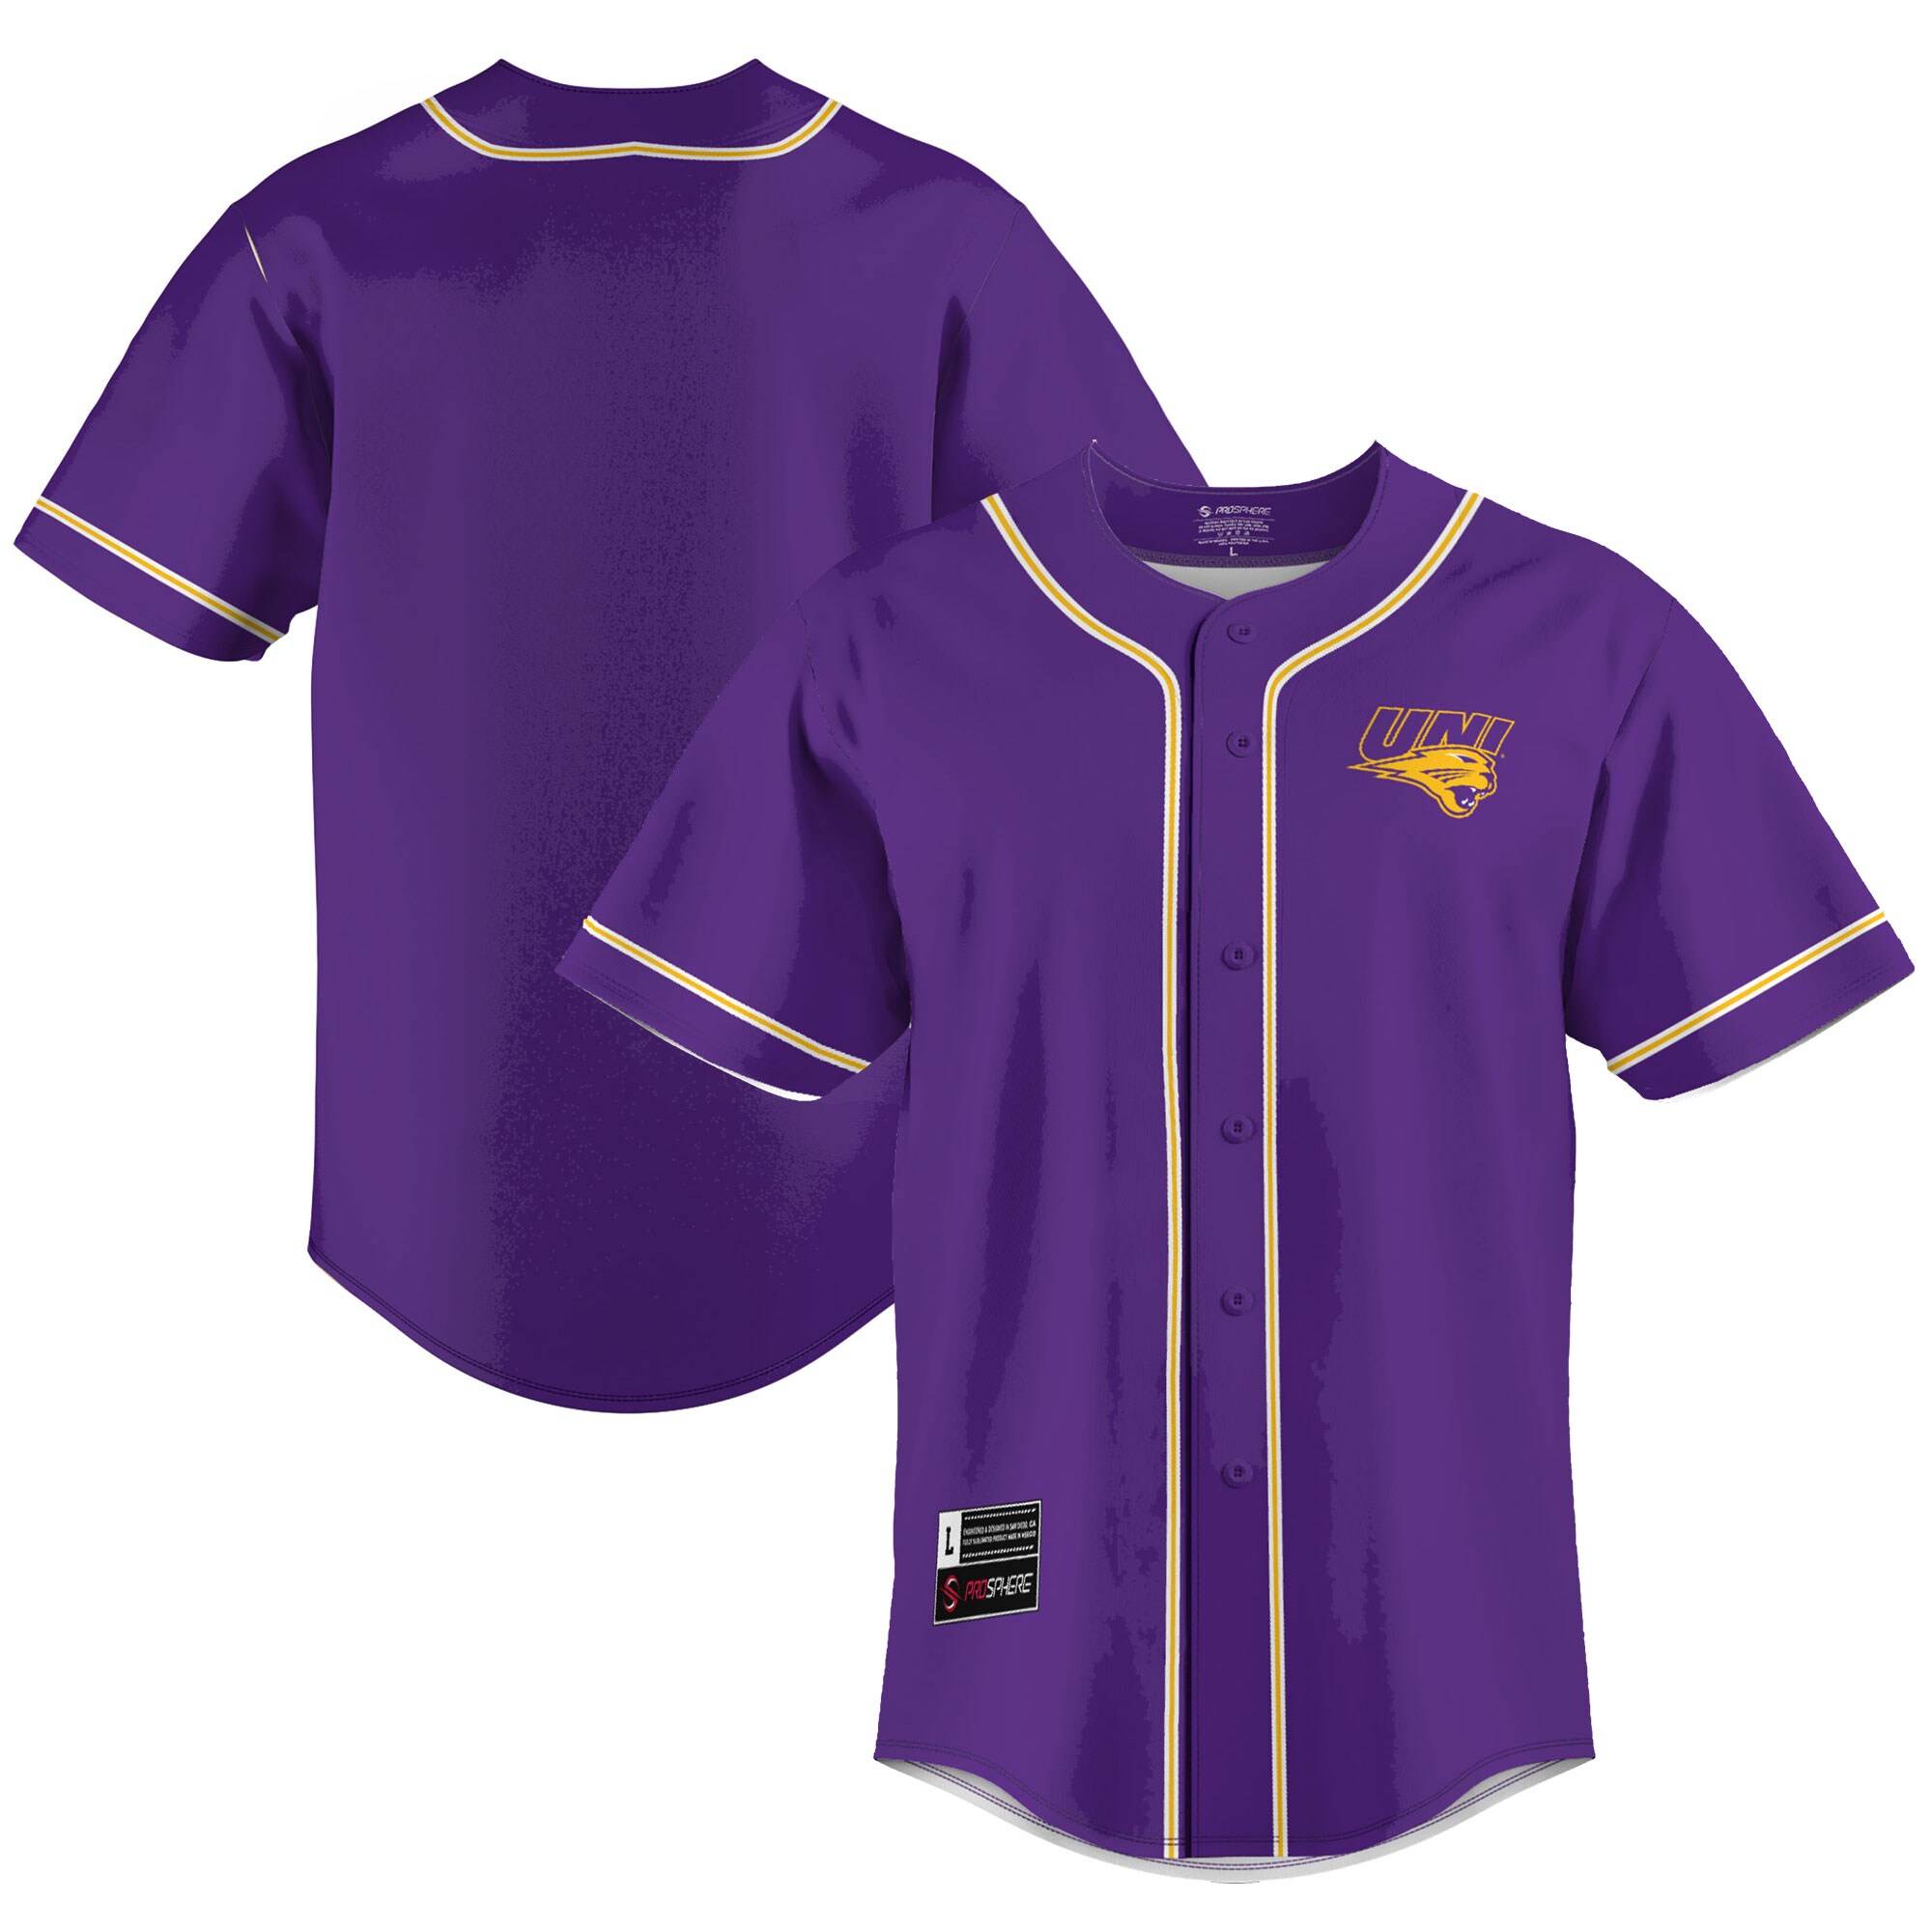 Northern Iowa Panthers Baseball Jersey - Purple For Youth Women Men